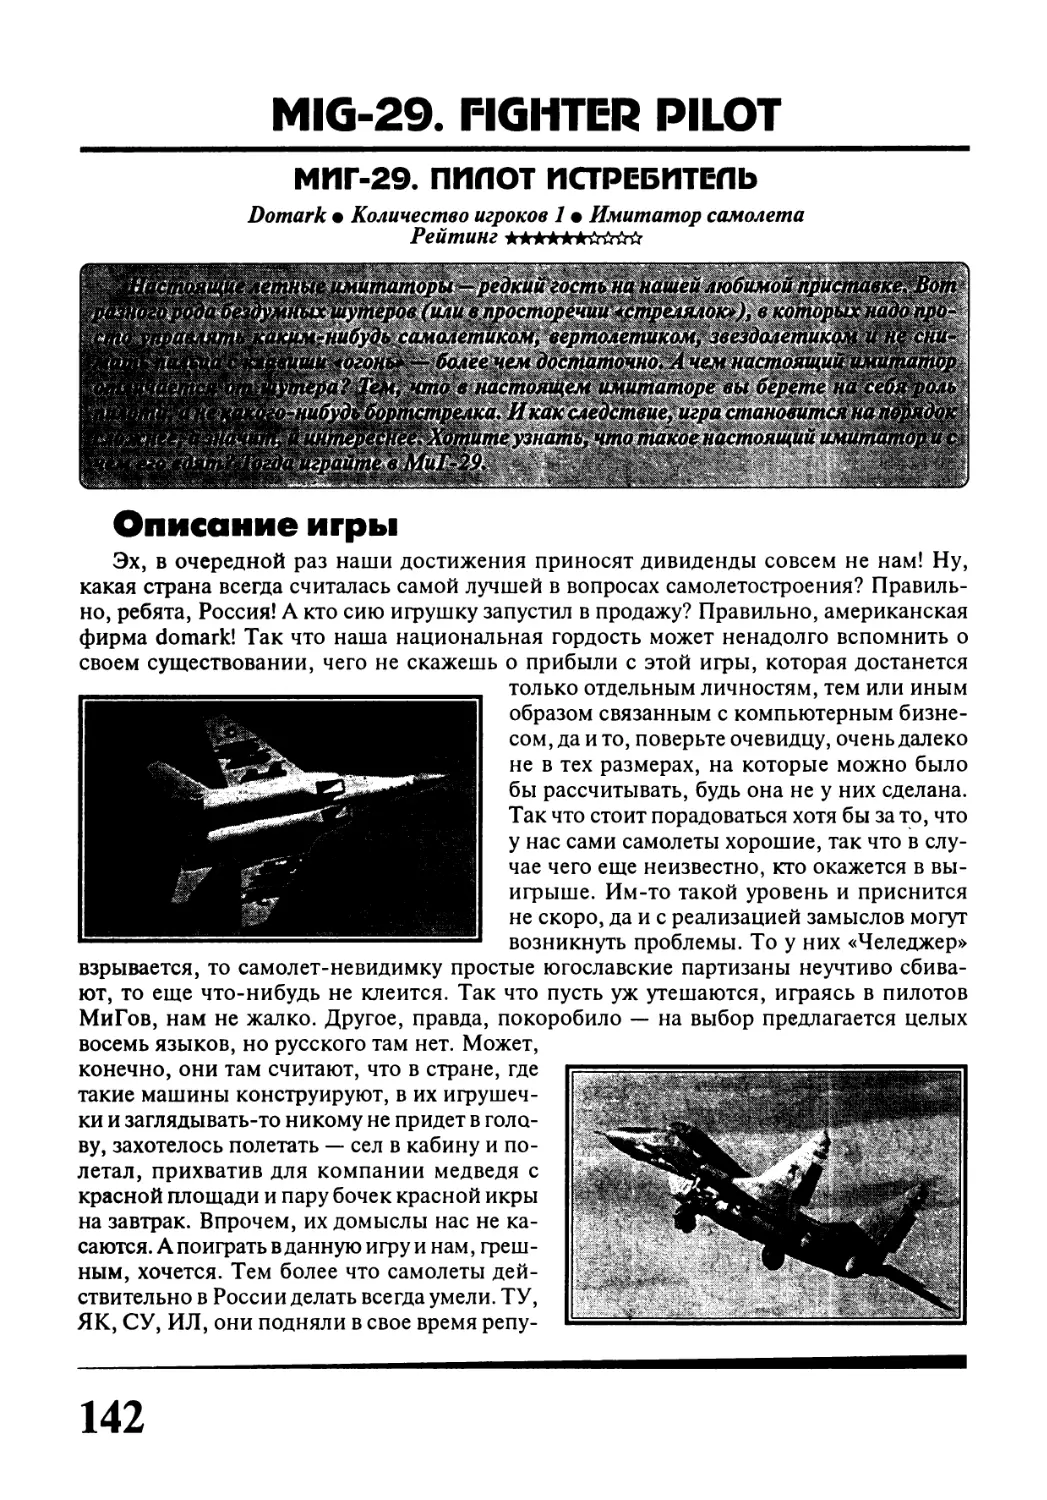 MIG-29, FIGHTER PILOT